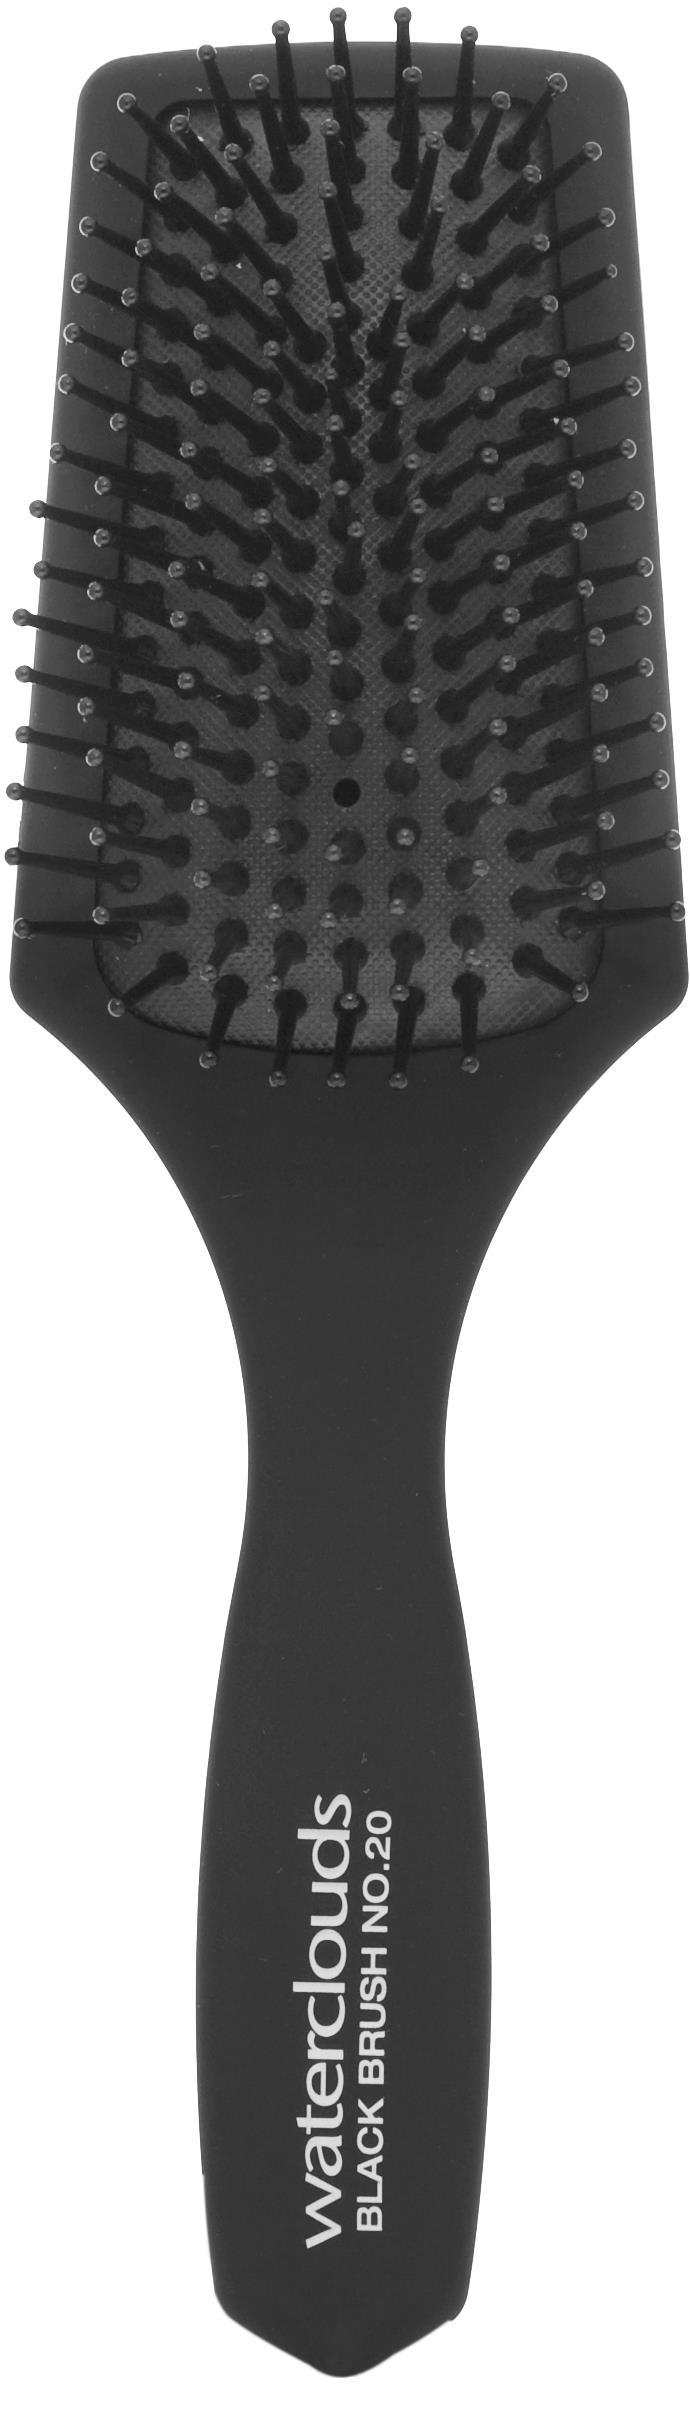 Watercloud's Black Brush 20 Mini Paddle Brush